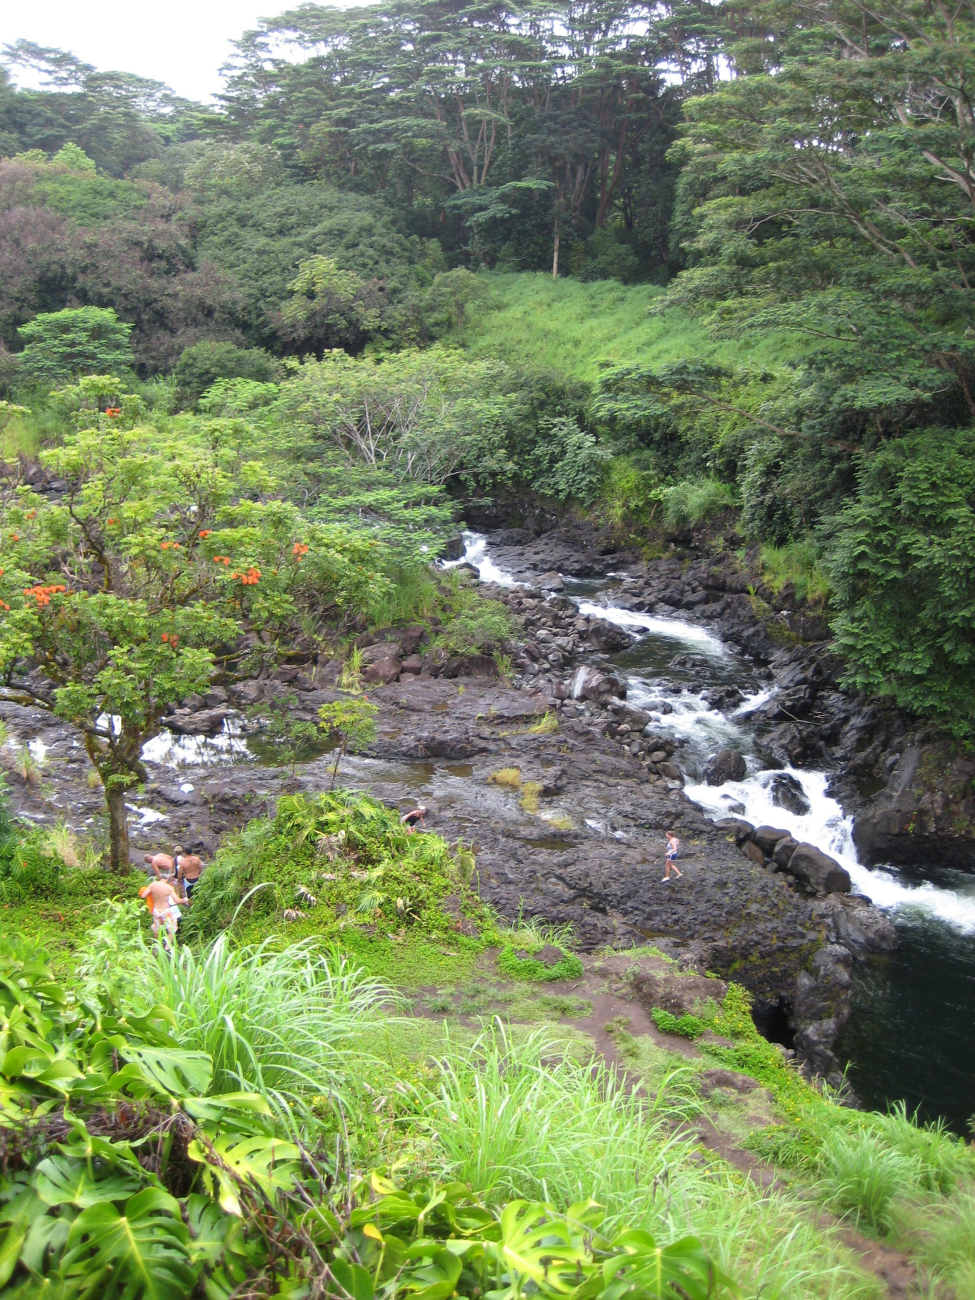 Hikers heading for swimming hole through lush Hawaiian foliage